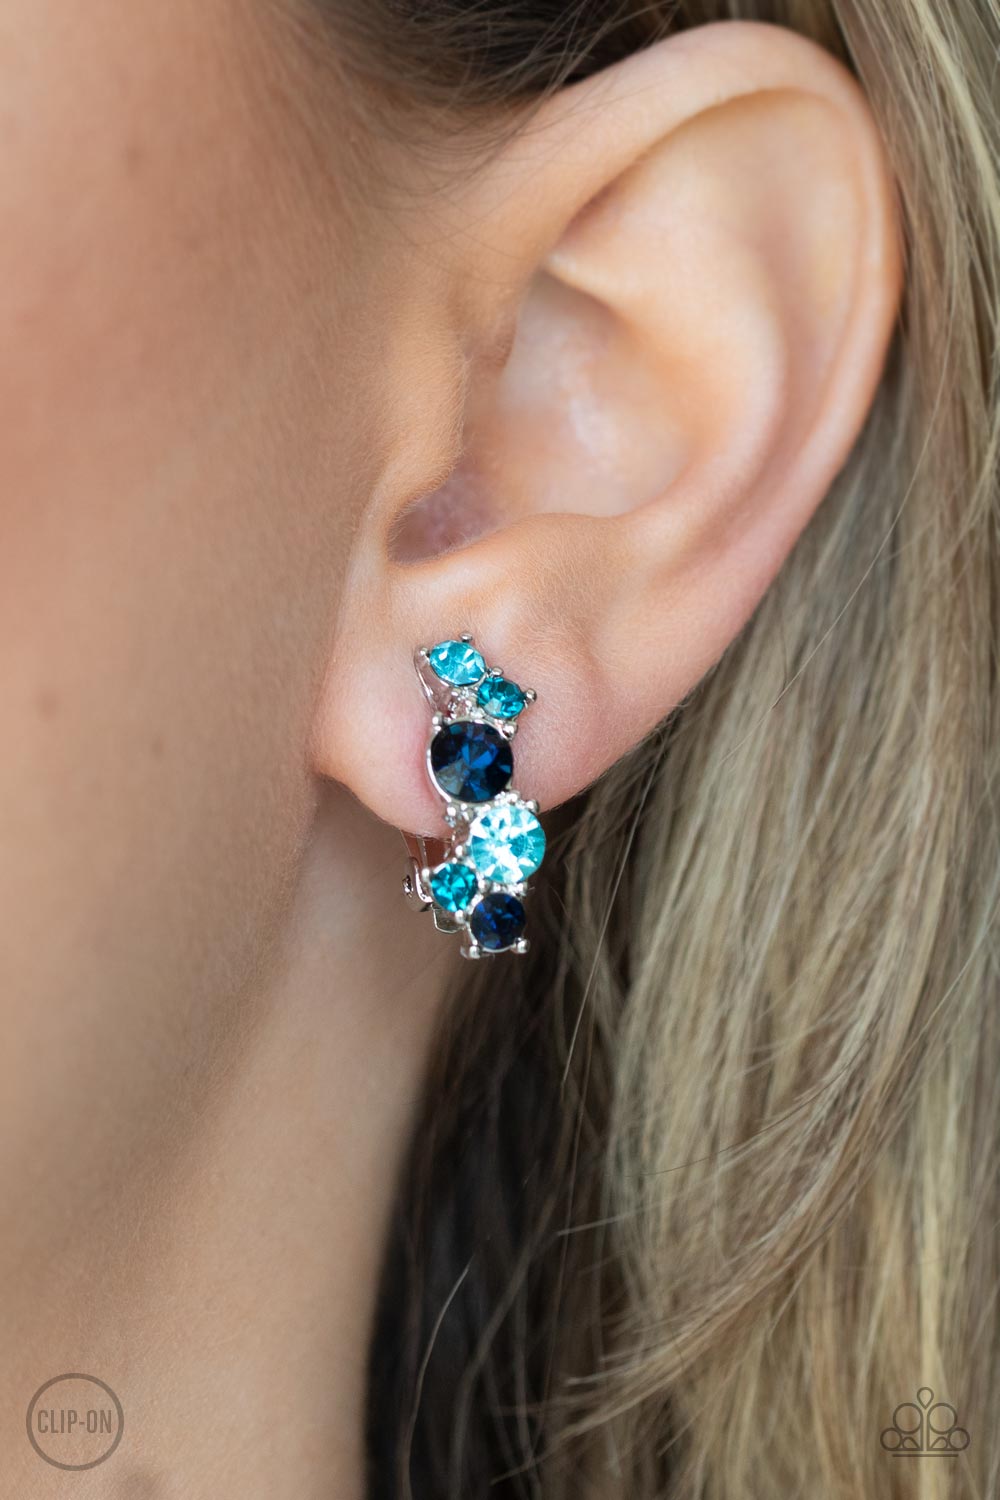 Cosmic Celebration Blue Rhinestone Clip-on Earrings - Paparazzi Accessories- model - CarasShop.com - $5 Jewelry by Cara Jewels